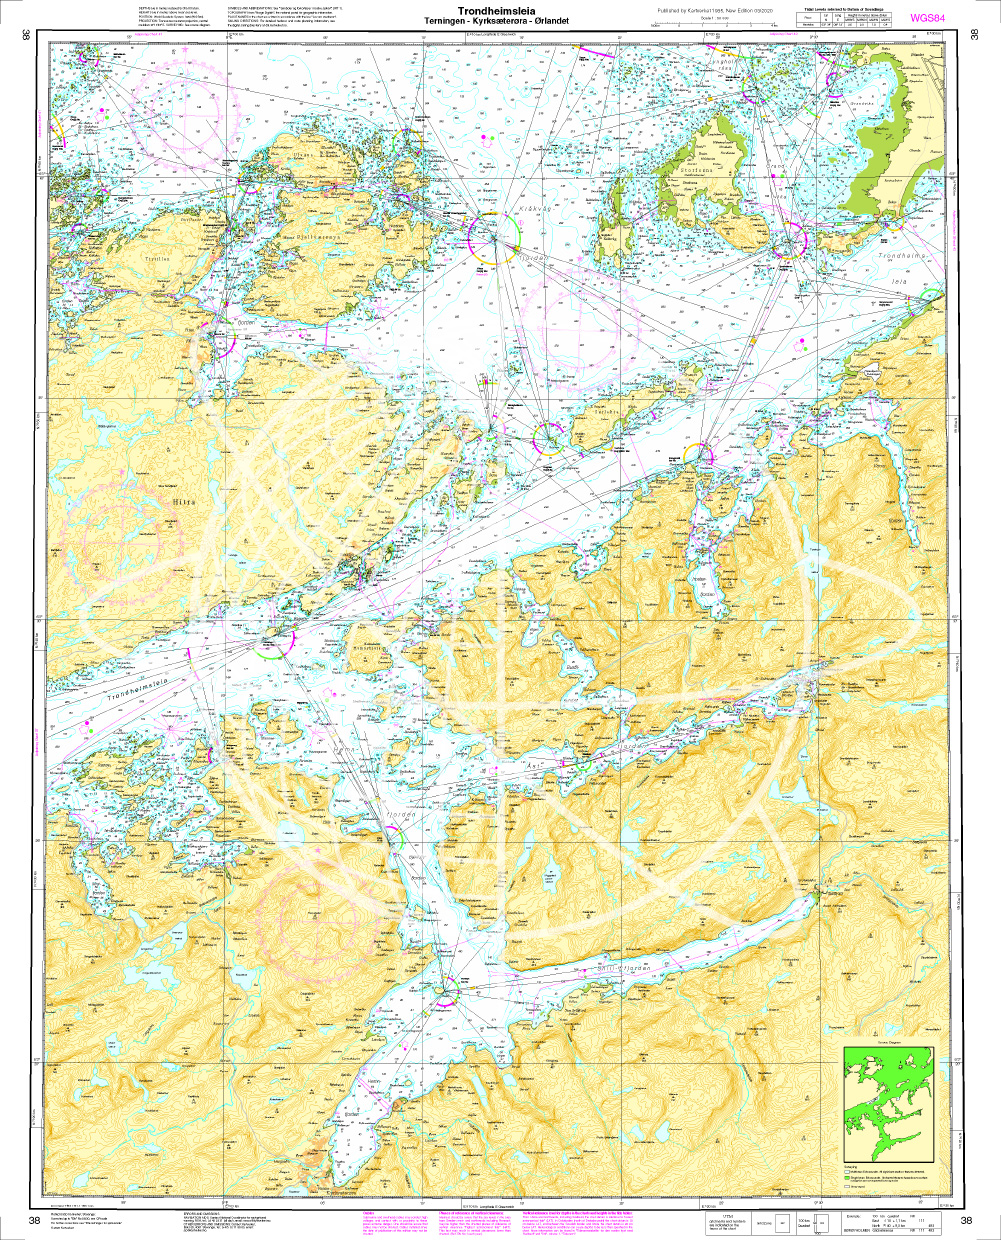 Norwegen N 38 Atlantik Trondheimsleia. Terningen - Kyrksæterøra - Ørlandet